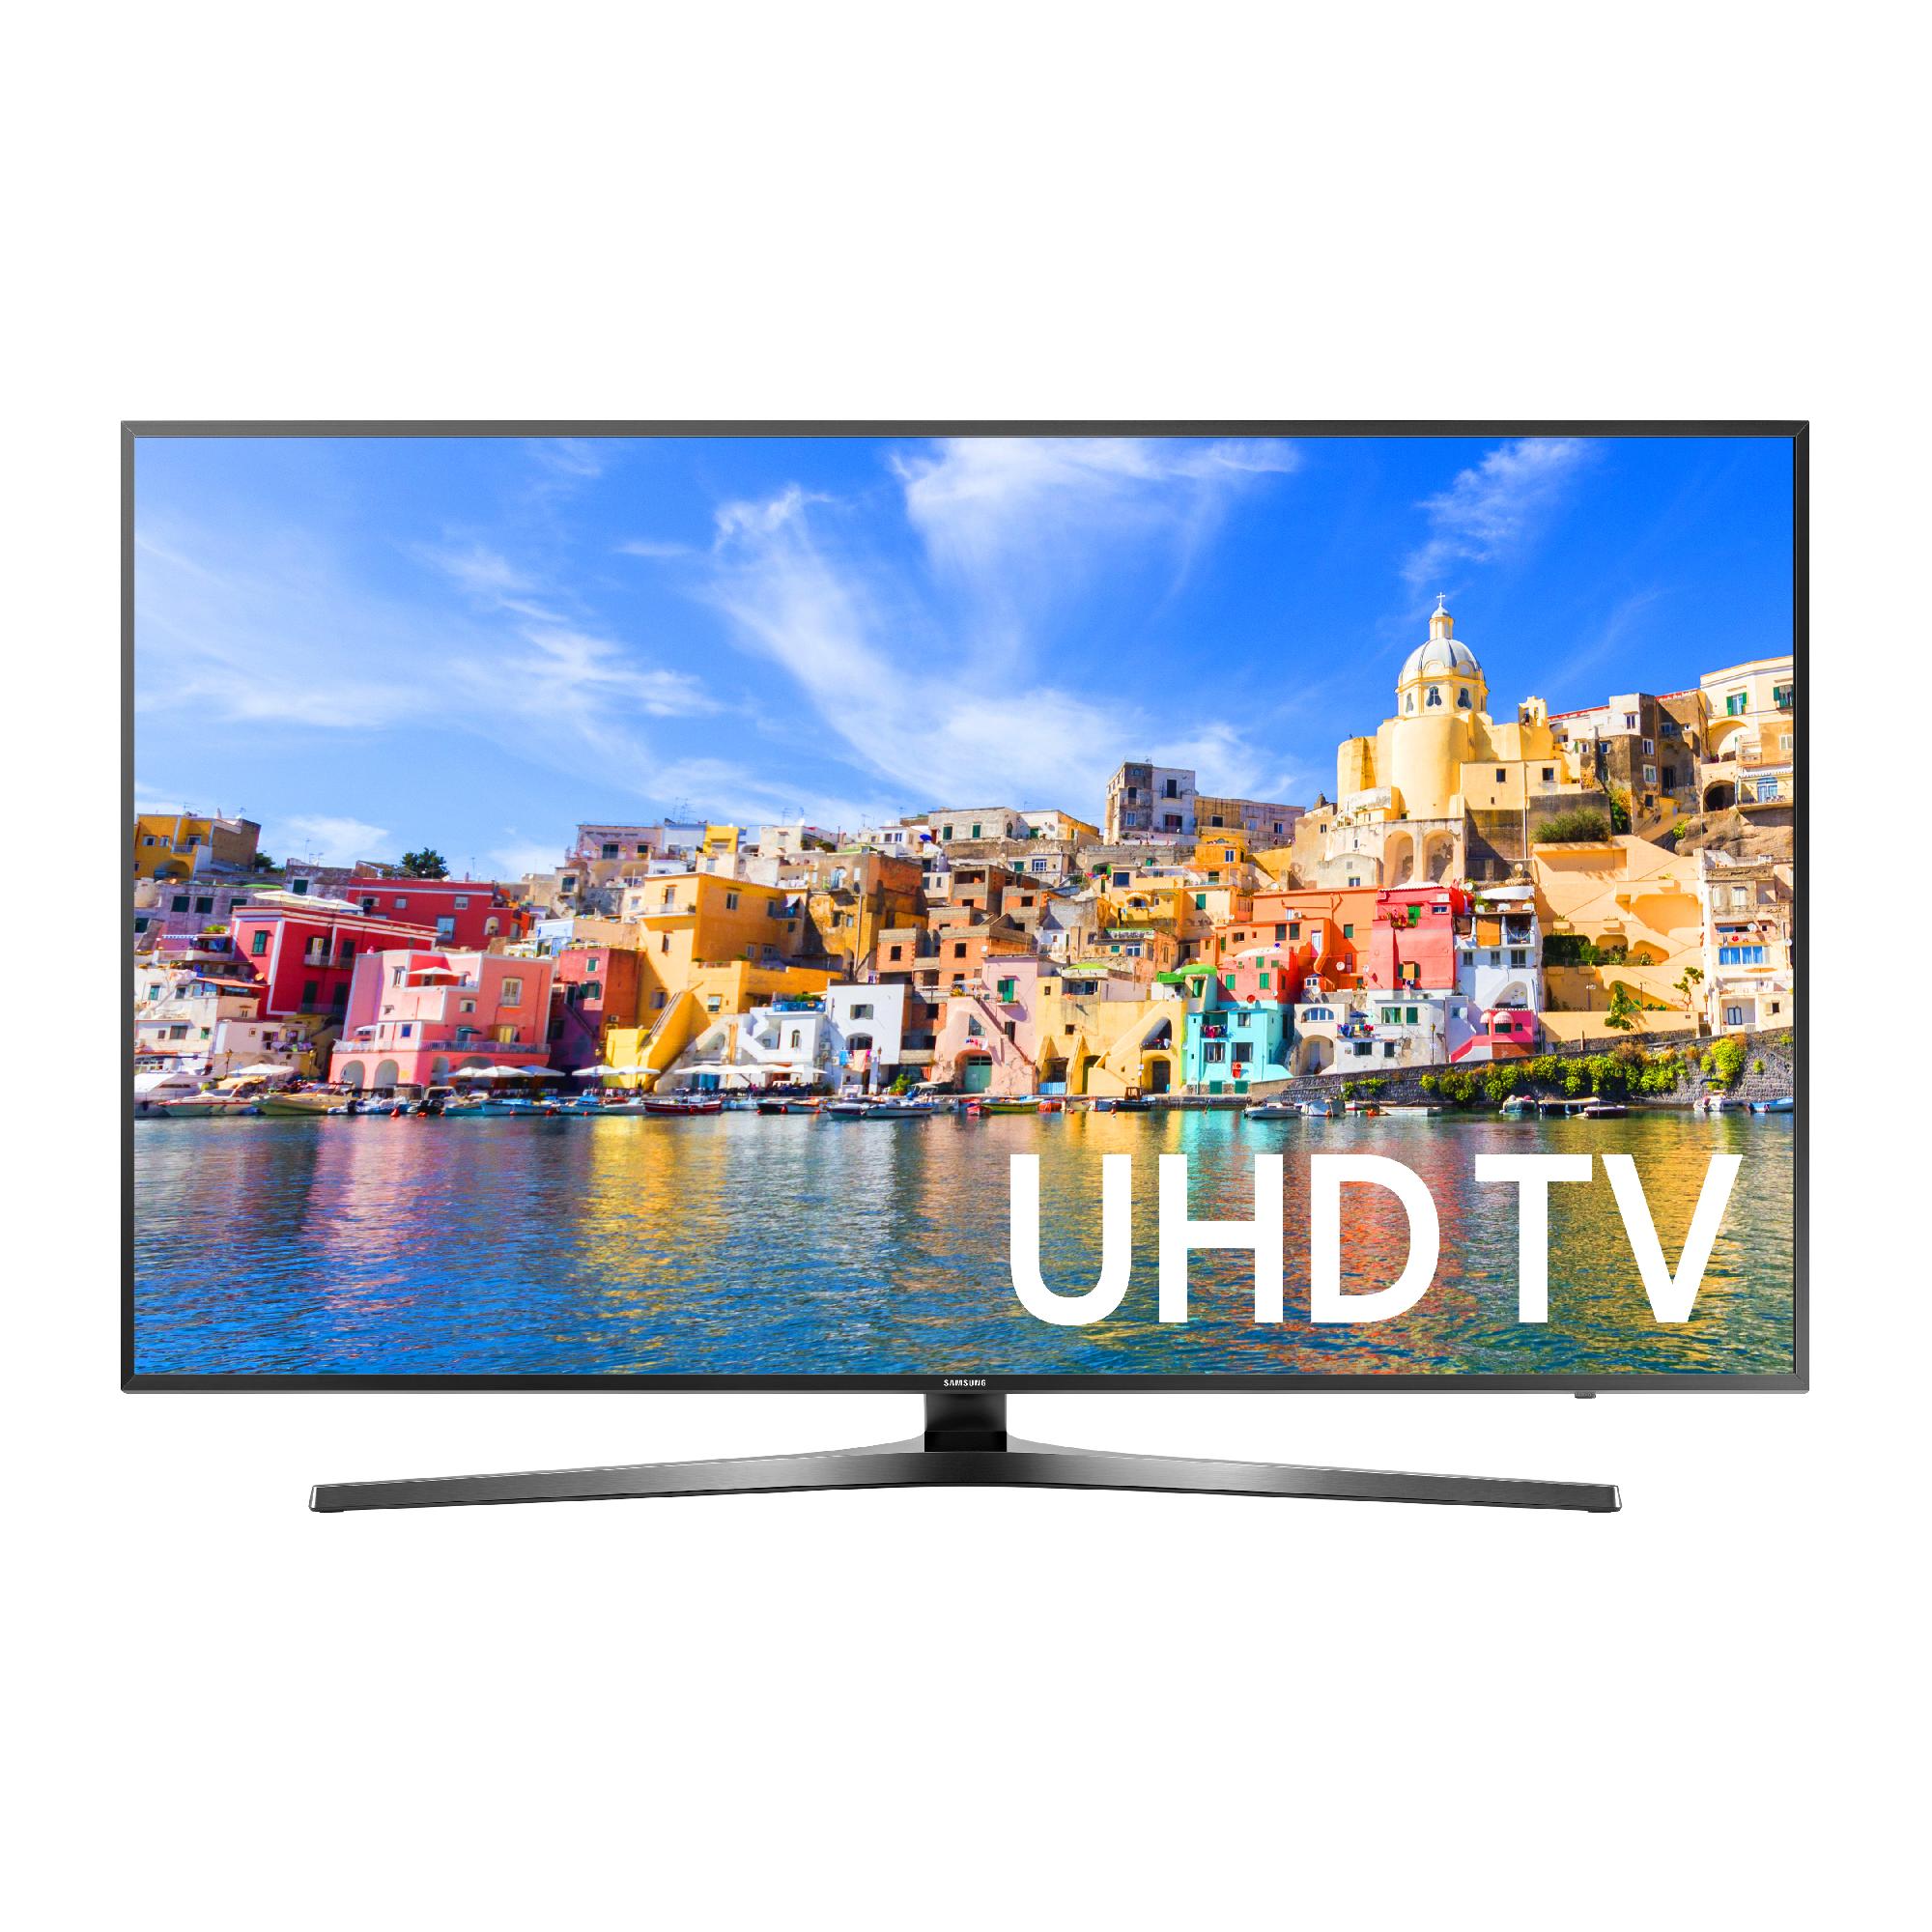 Samsung 7000 UN65KU7000F 65" 2160p LED-LCD TV - 16:9 - 4K UHDTV - image 2 of 7